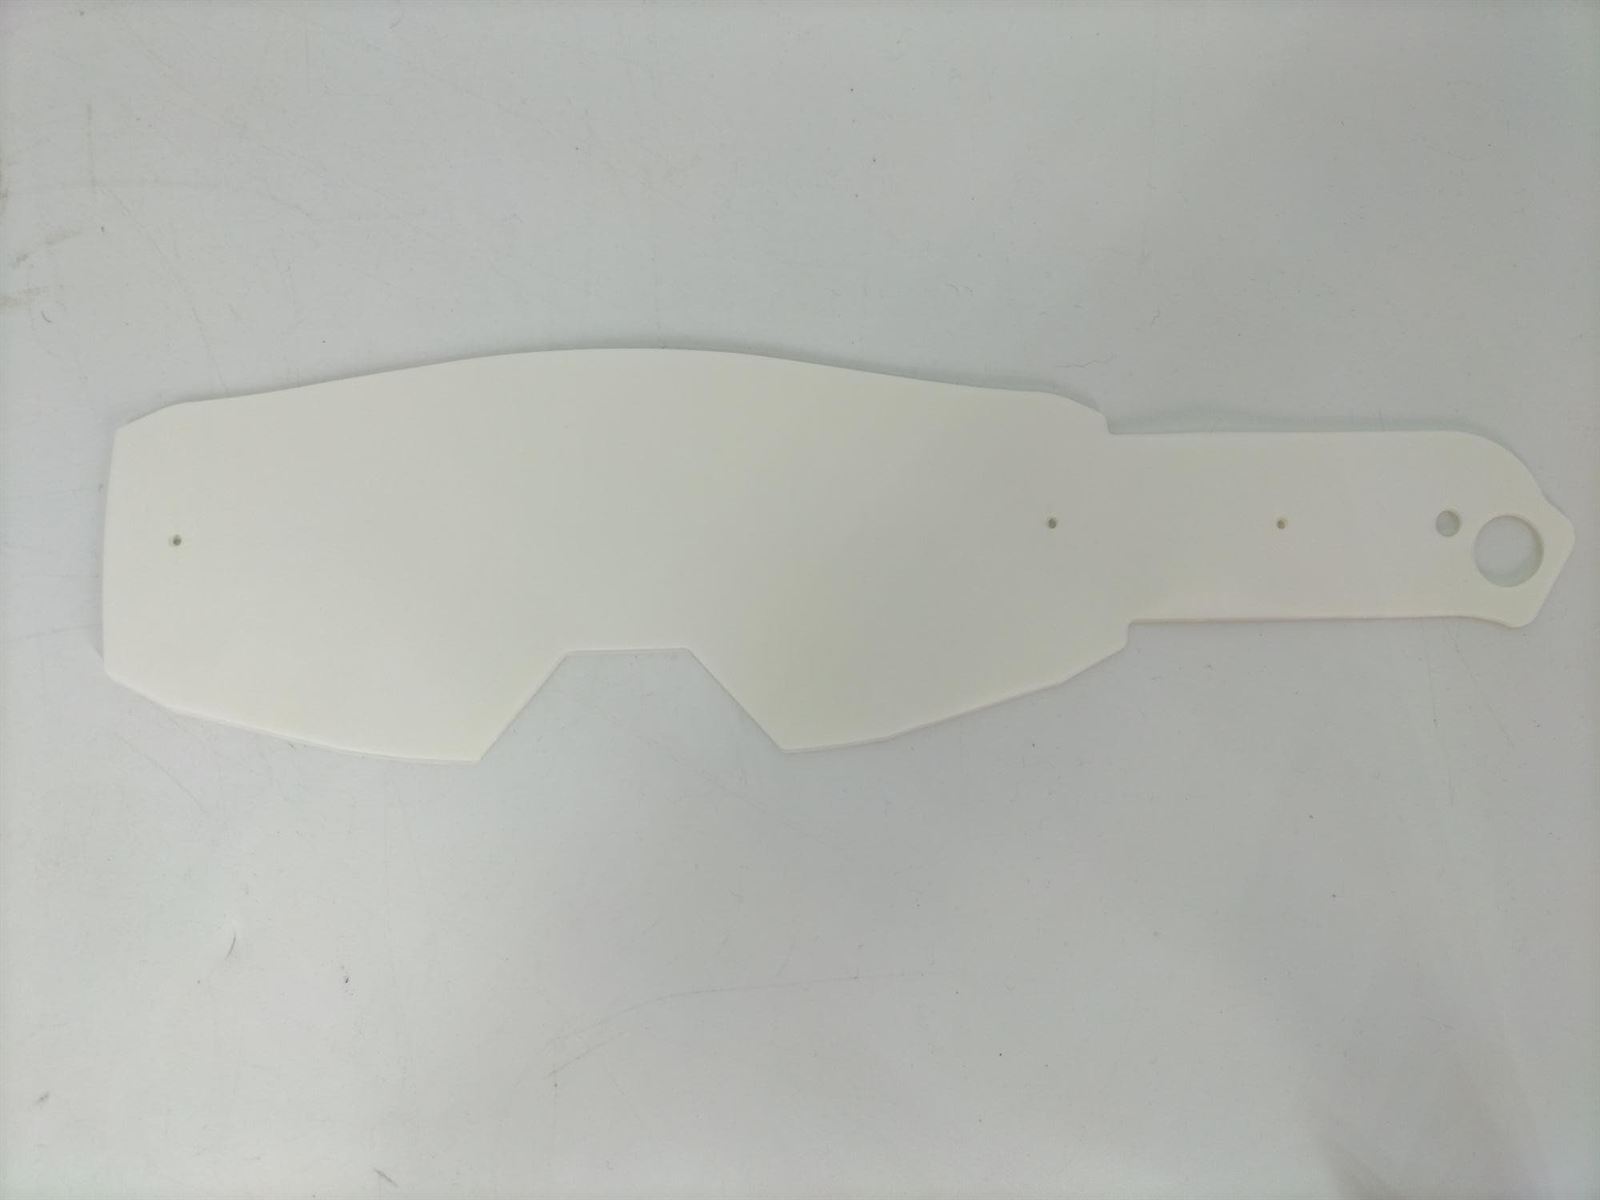 Tirables gafas Unik GX-01 - Imagen 1